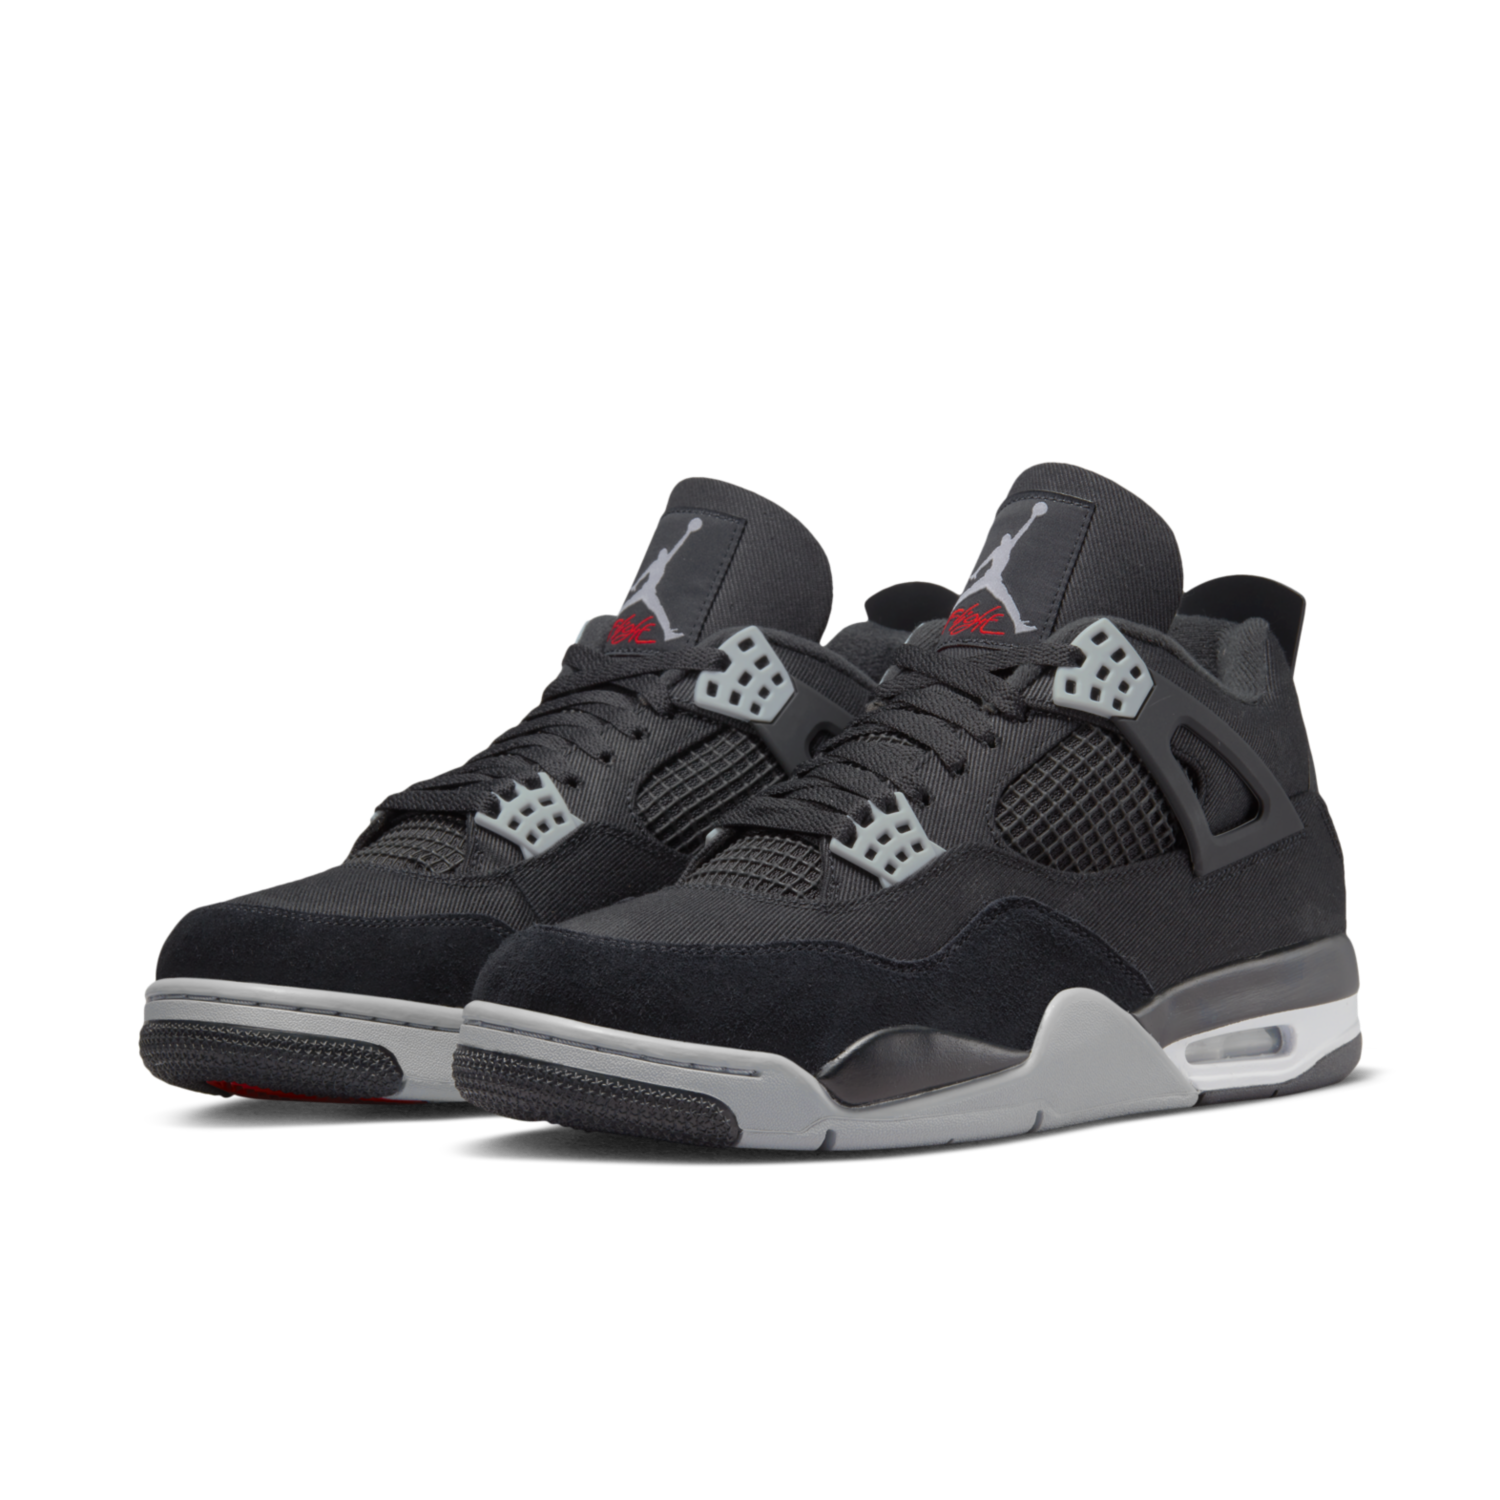 Air Jordan 4 Retro SE 'Black Canvas' Most Wanted Sneaker Releases Woche 36